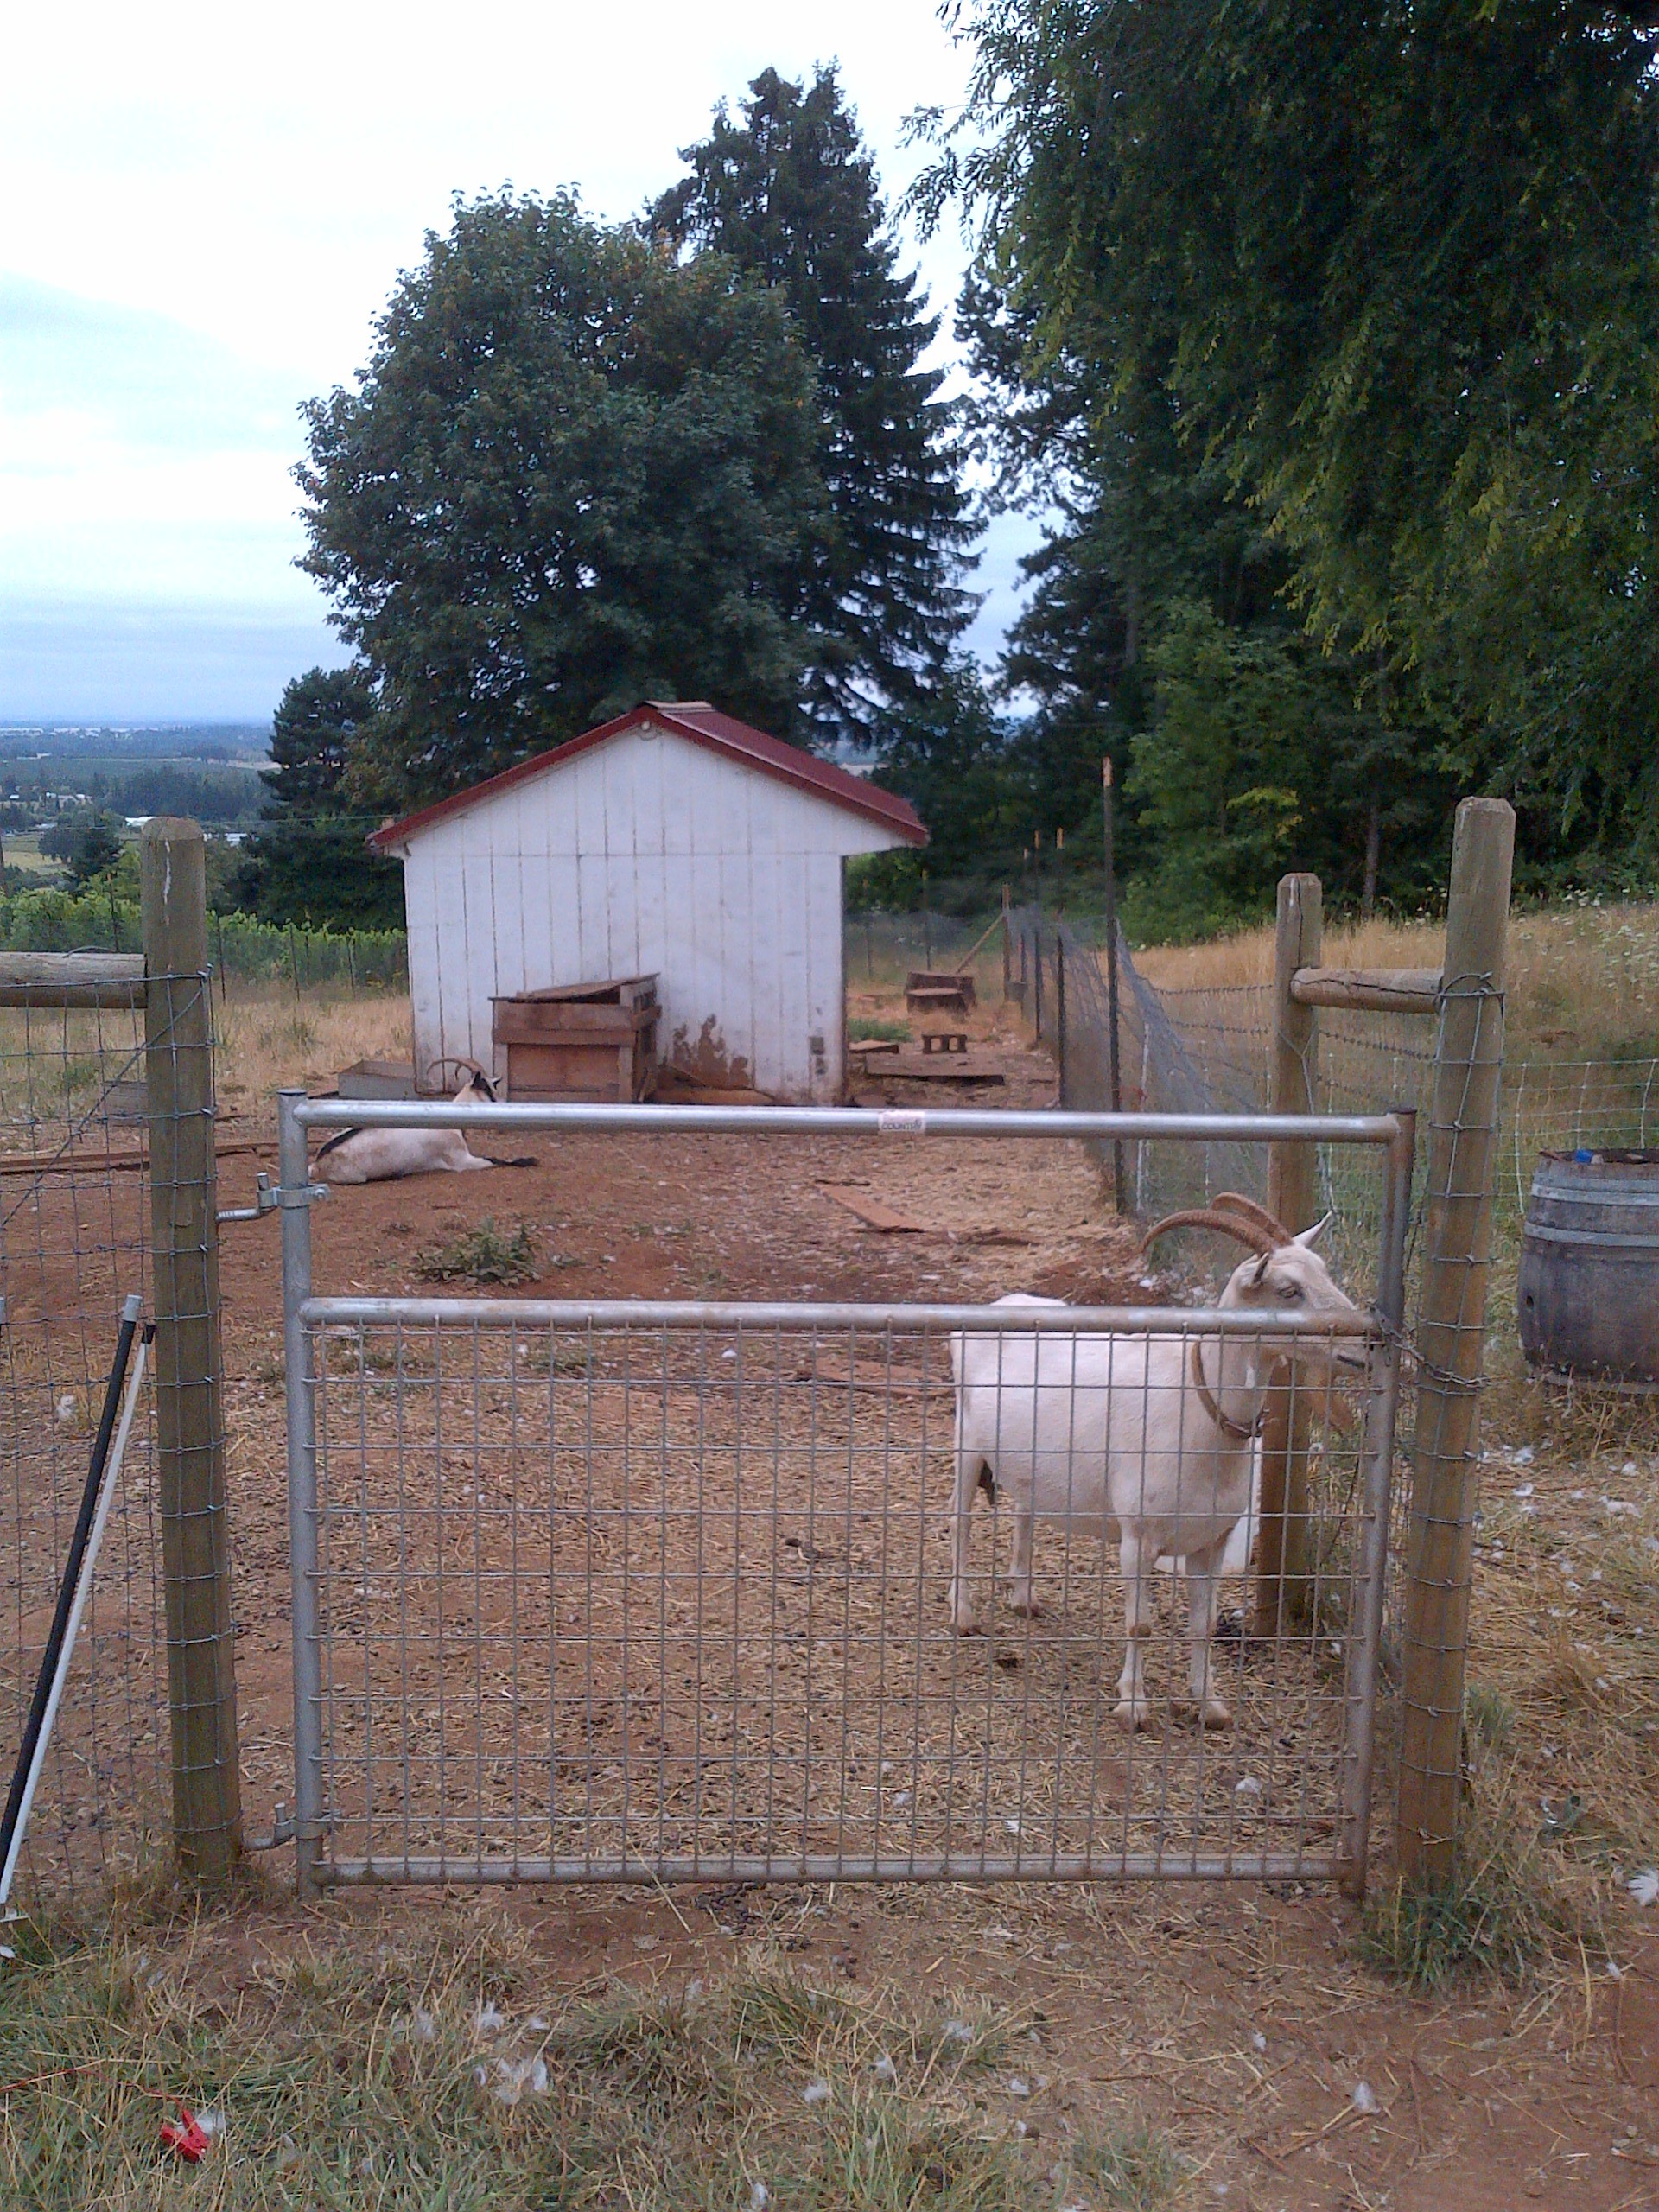  Cameron winery goats...  